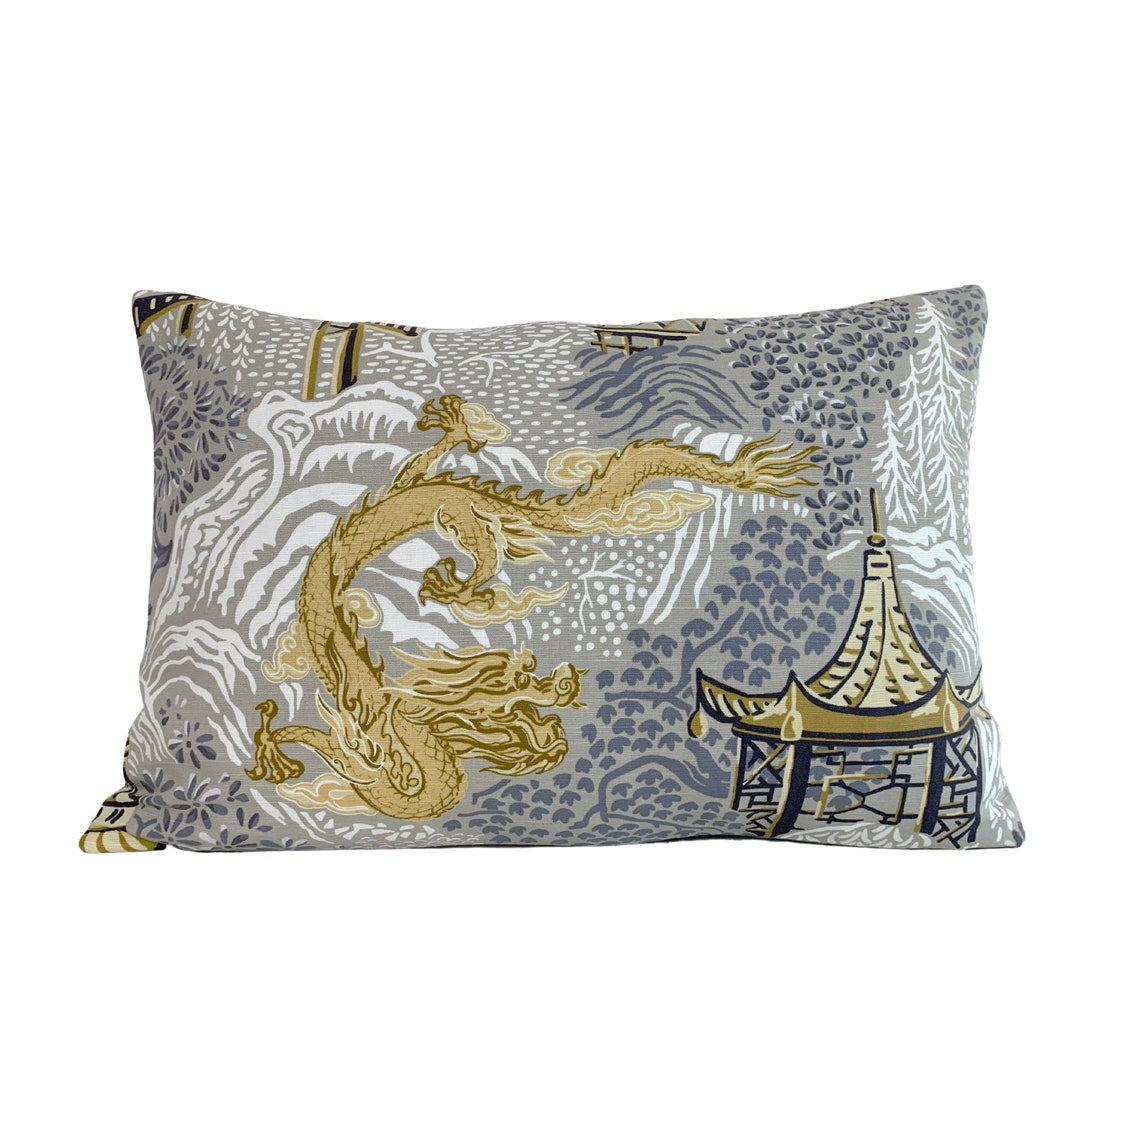 Vern Yip Pagodas Dragon Throw Pillow Cover in Citrine - Modern Chinoiserie - Available in Lumbar, Bolster, Throw, Euro Sham Sizes